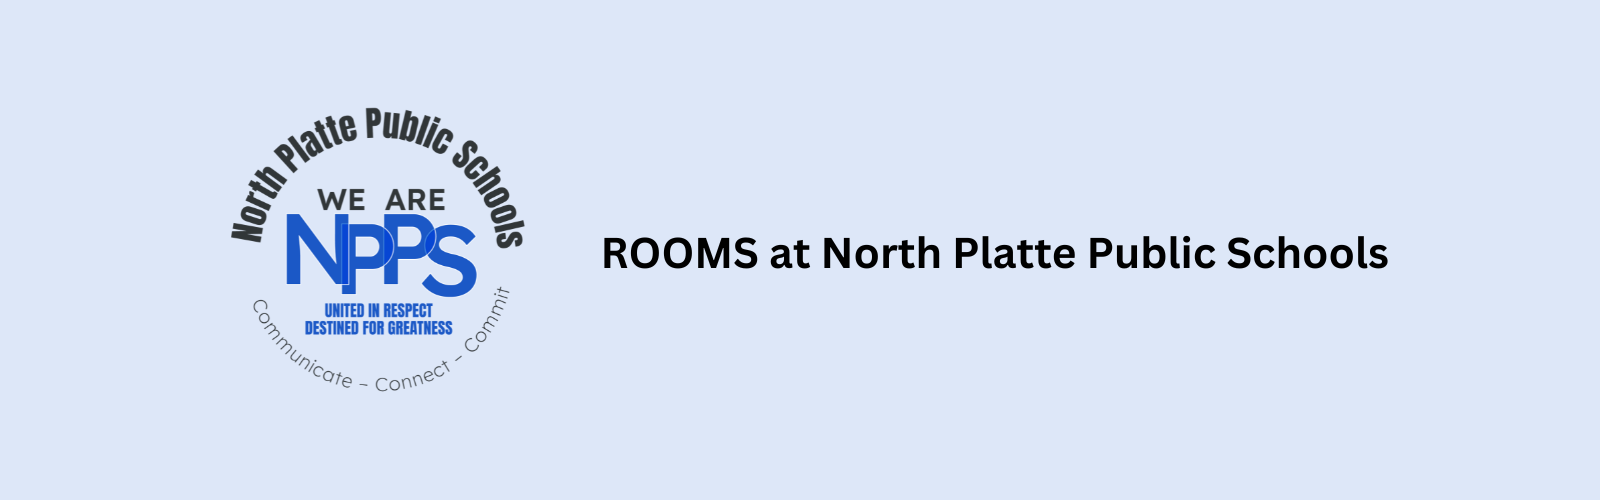 North Platte Public Schools logo; "Communicate, Connect, Commit" - ROOMS at North Platte Public Schools